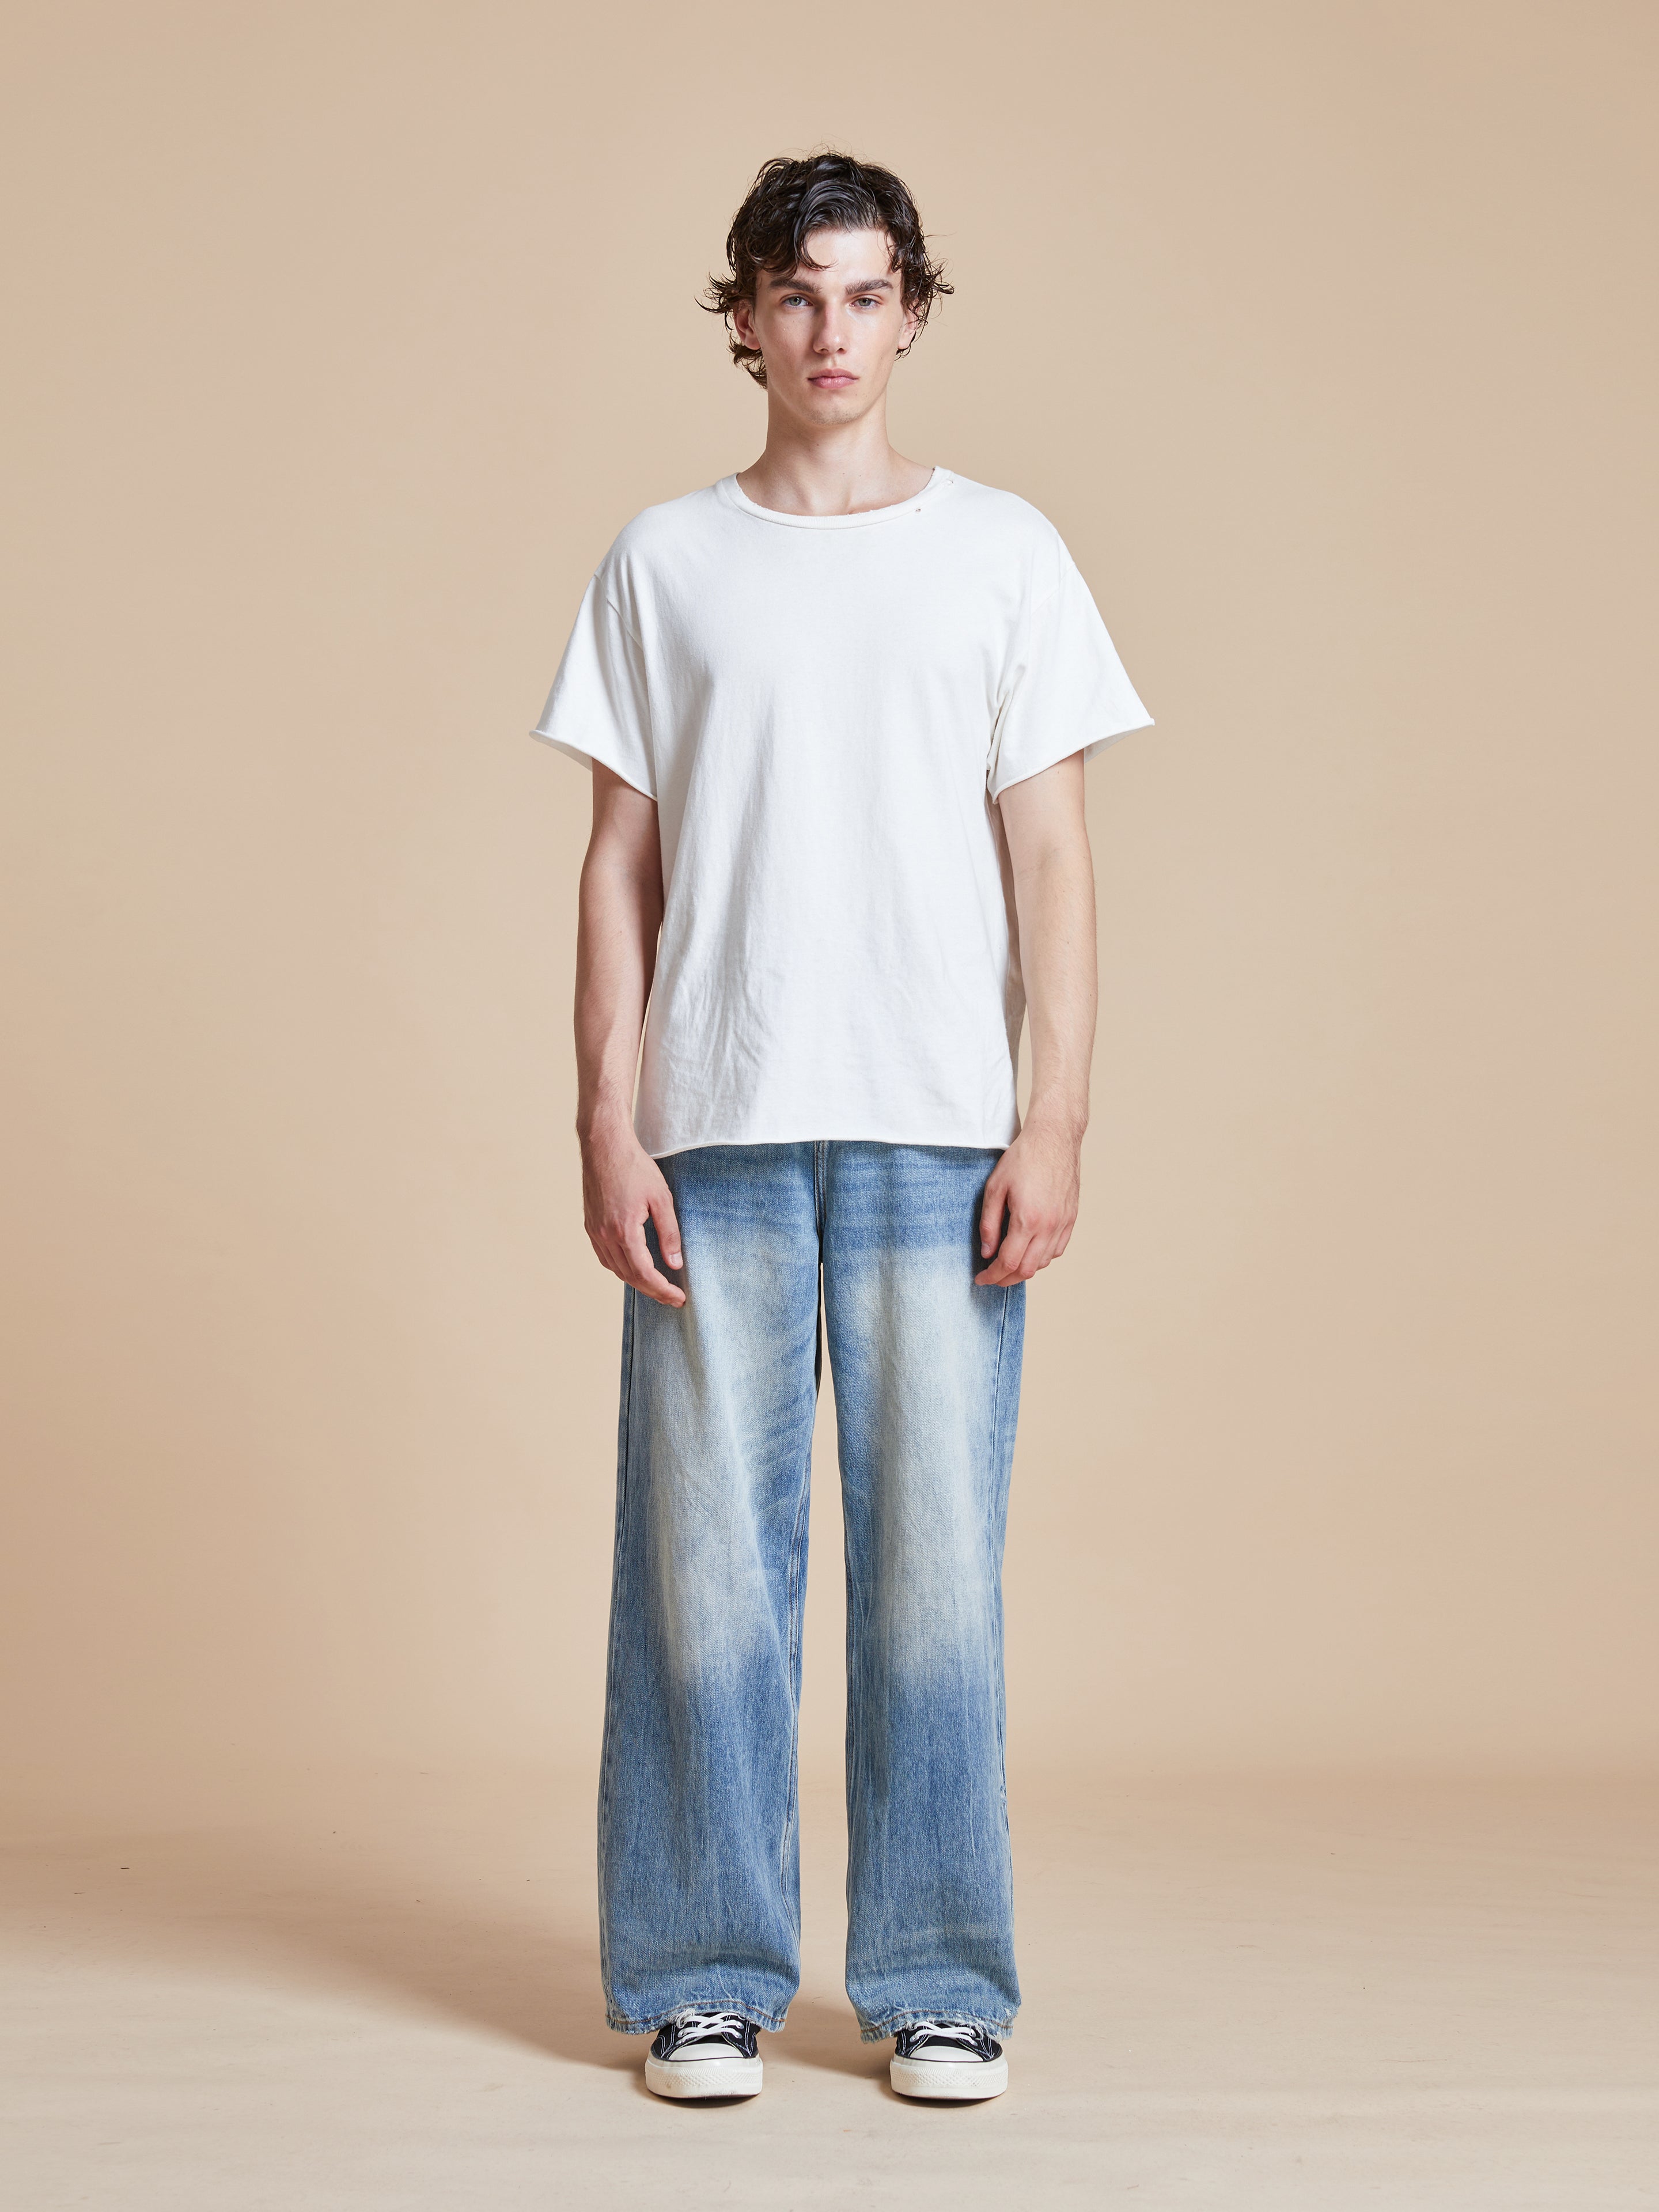 Kids Teen Boys Girls Fashion Hip Hop Loose Casual Short Sleeve T-shirt  Denim Jeans Pants Sets Children T Shirts Trousers Clothes